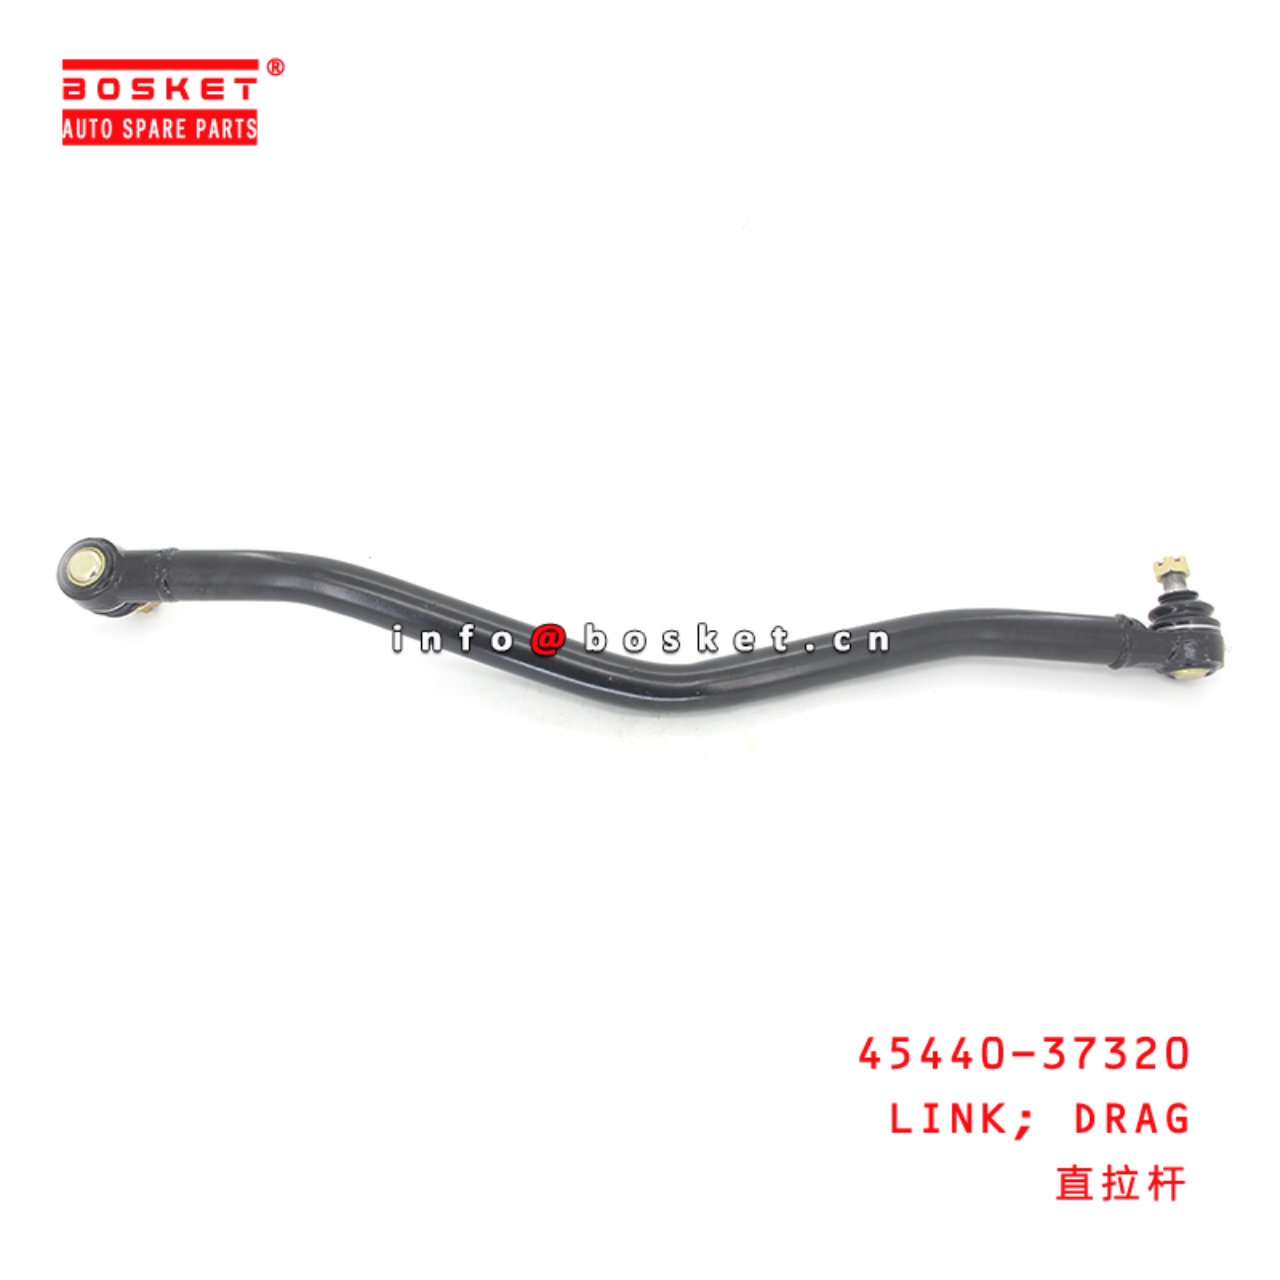 45440-37320 Drag Link Suitable for ISUZU HINO300